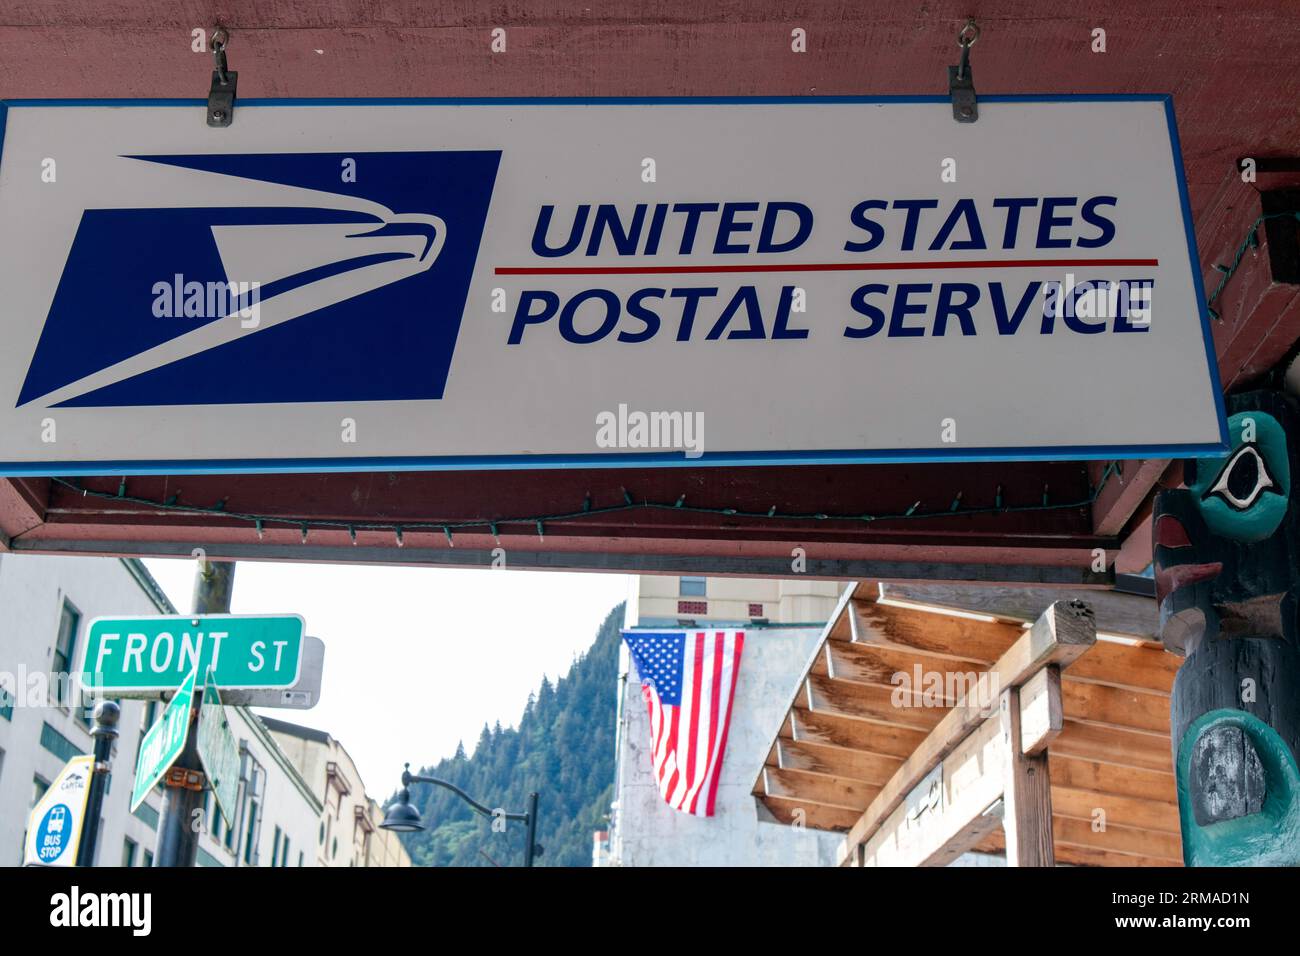 United States Postal Service. Stock Photo